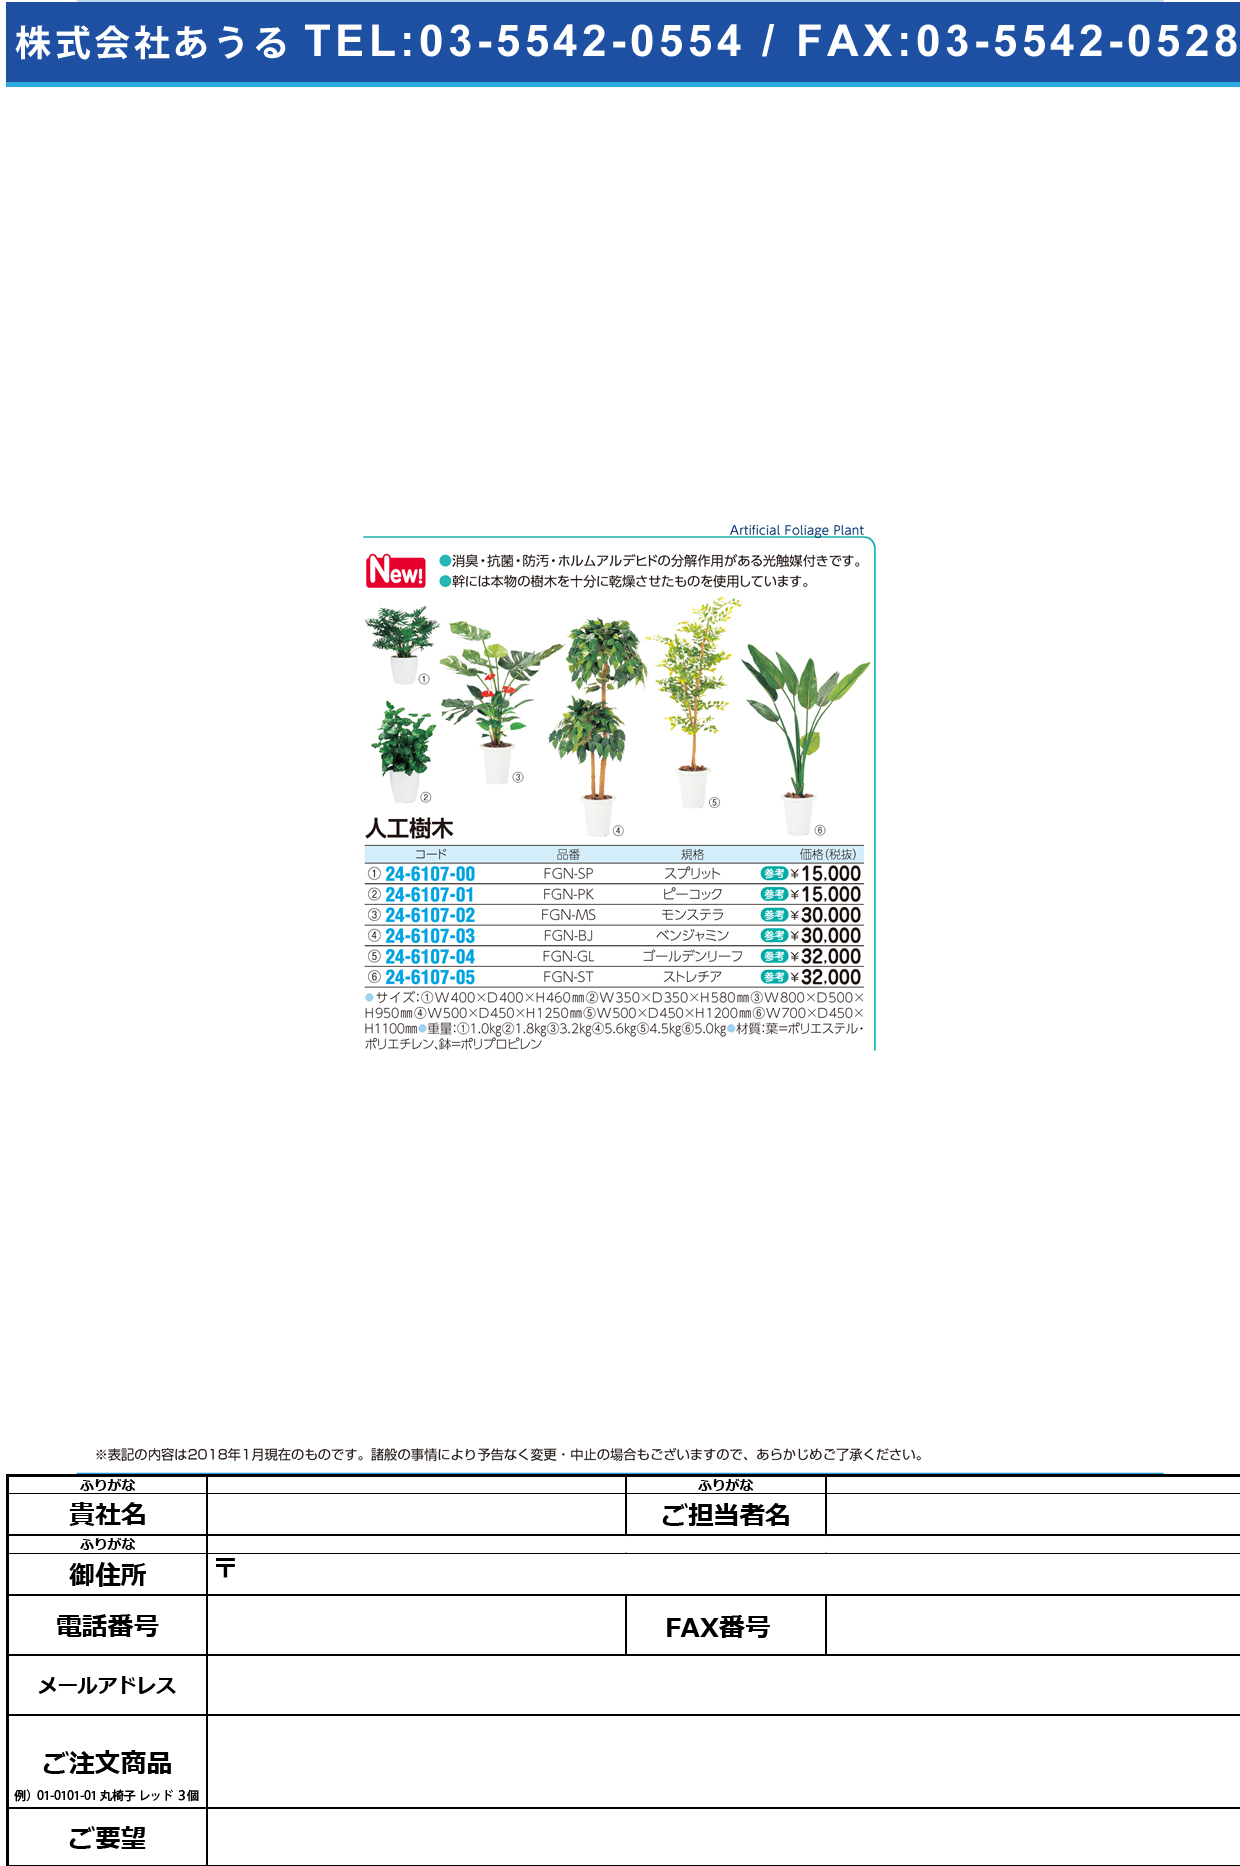 (24-6107-03)人工樹木 FGN-BJ(ﾍﾞﾝｼﾞｬﾐﾝ) ｼﾞﾝｺｳｼﾞｭﾓｸ【1個単位】【2018年カタログ商品】